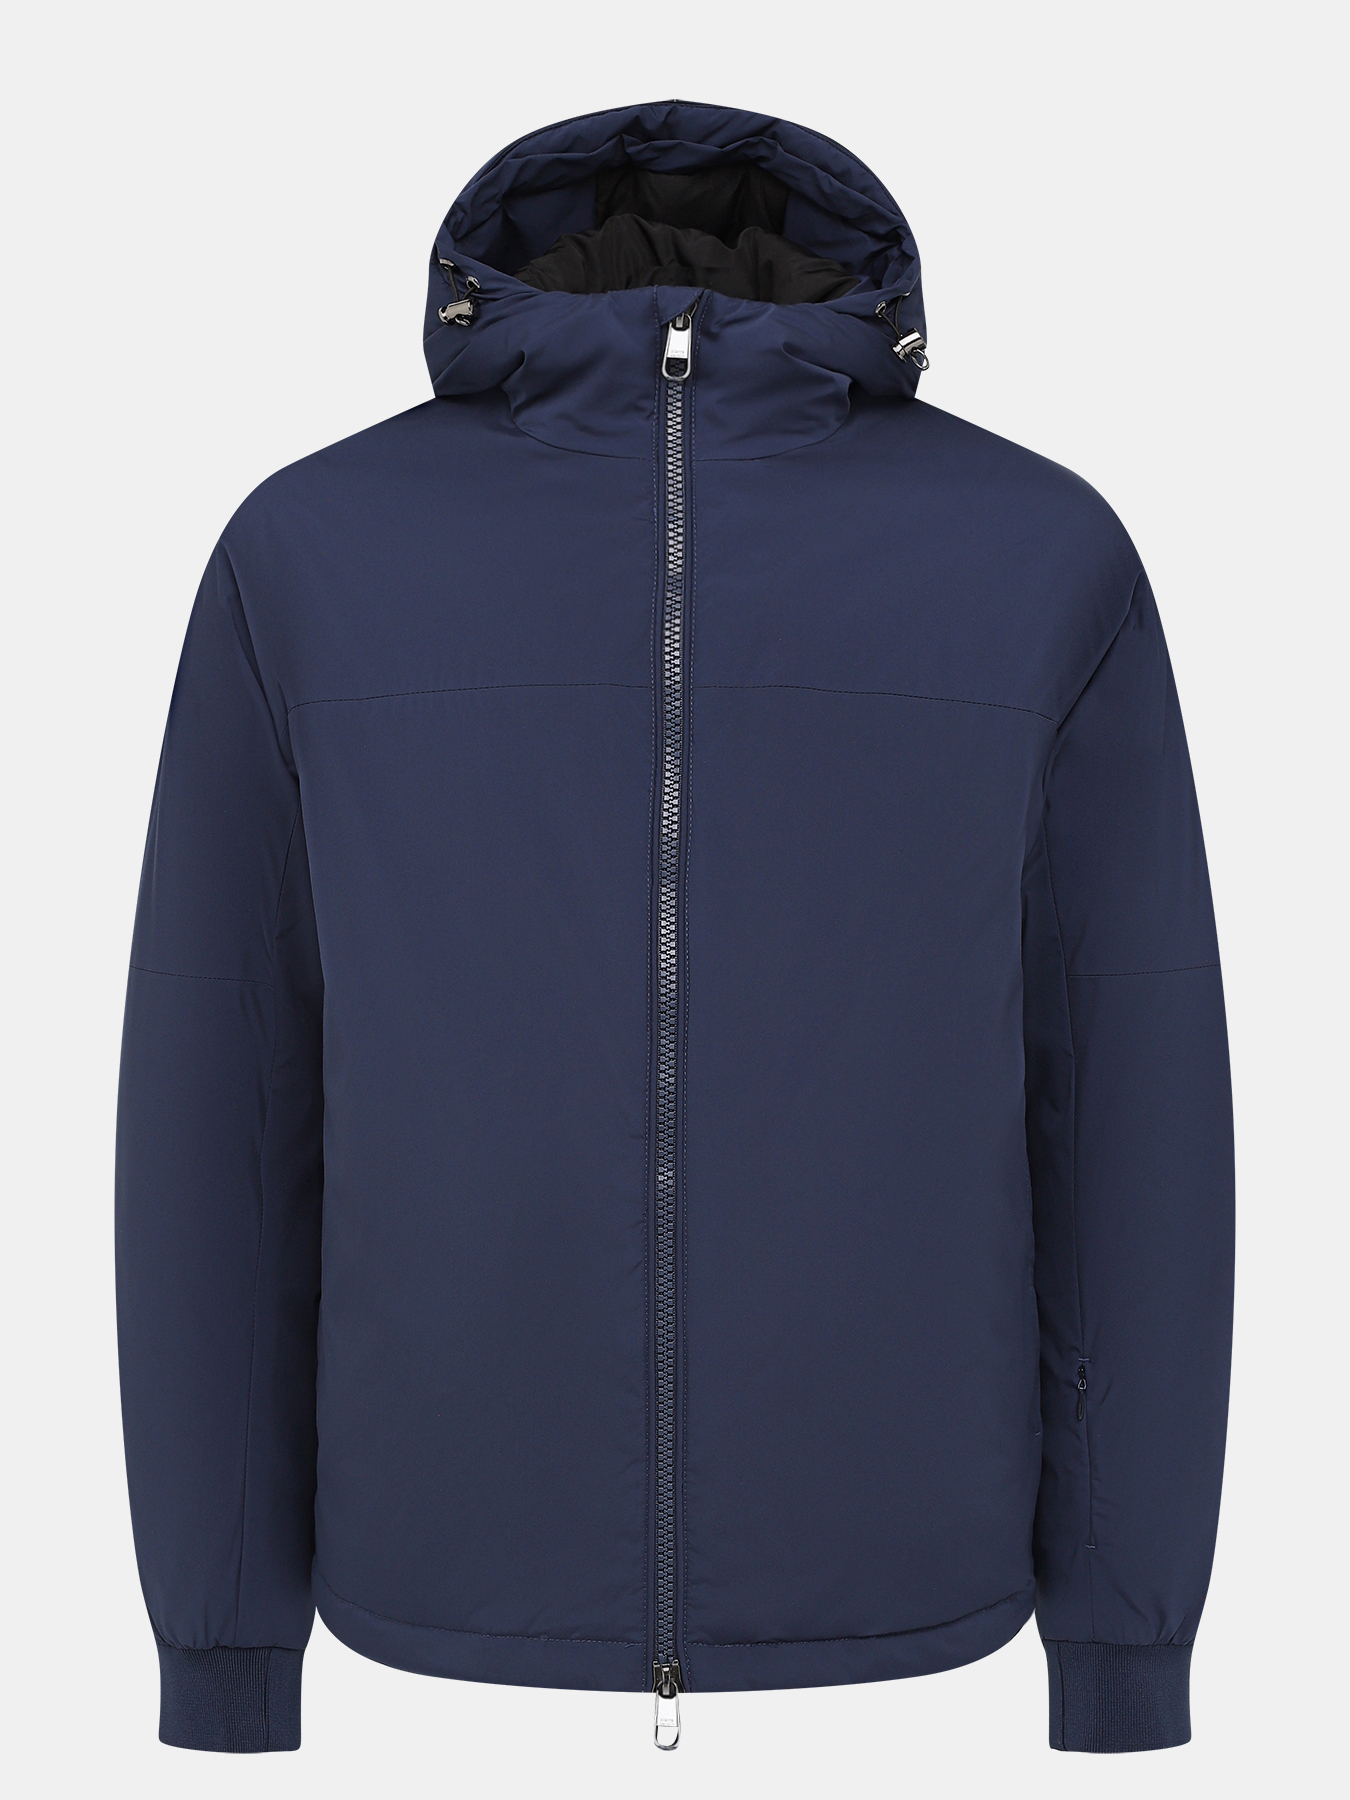 Куртка Pierre Cardin 426245-043, цвет темно-синий, размер 48-50